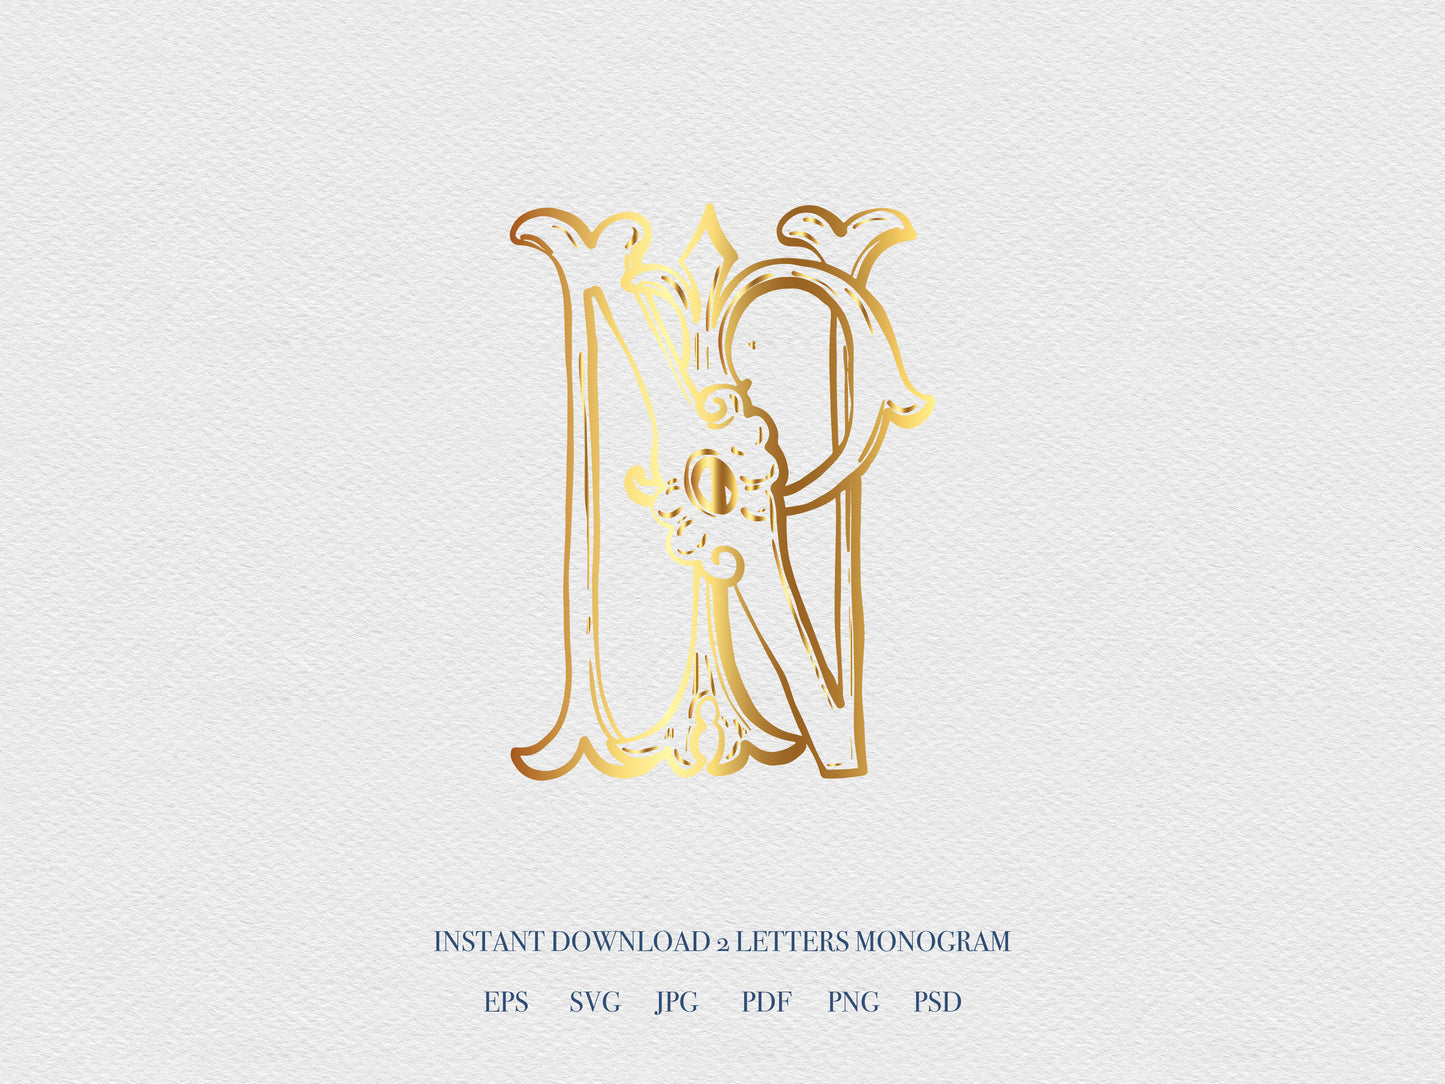 2 Letter Monogram with Letters NP PN | Digital Download - Wedding Monogram SVG, Personal Logo, Wedding Logo for Wedding Invitations The Wedding Crest Lab